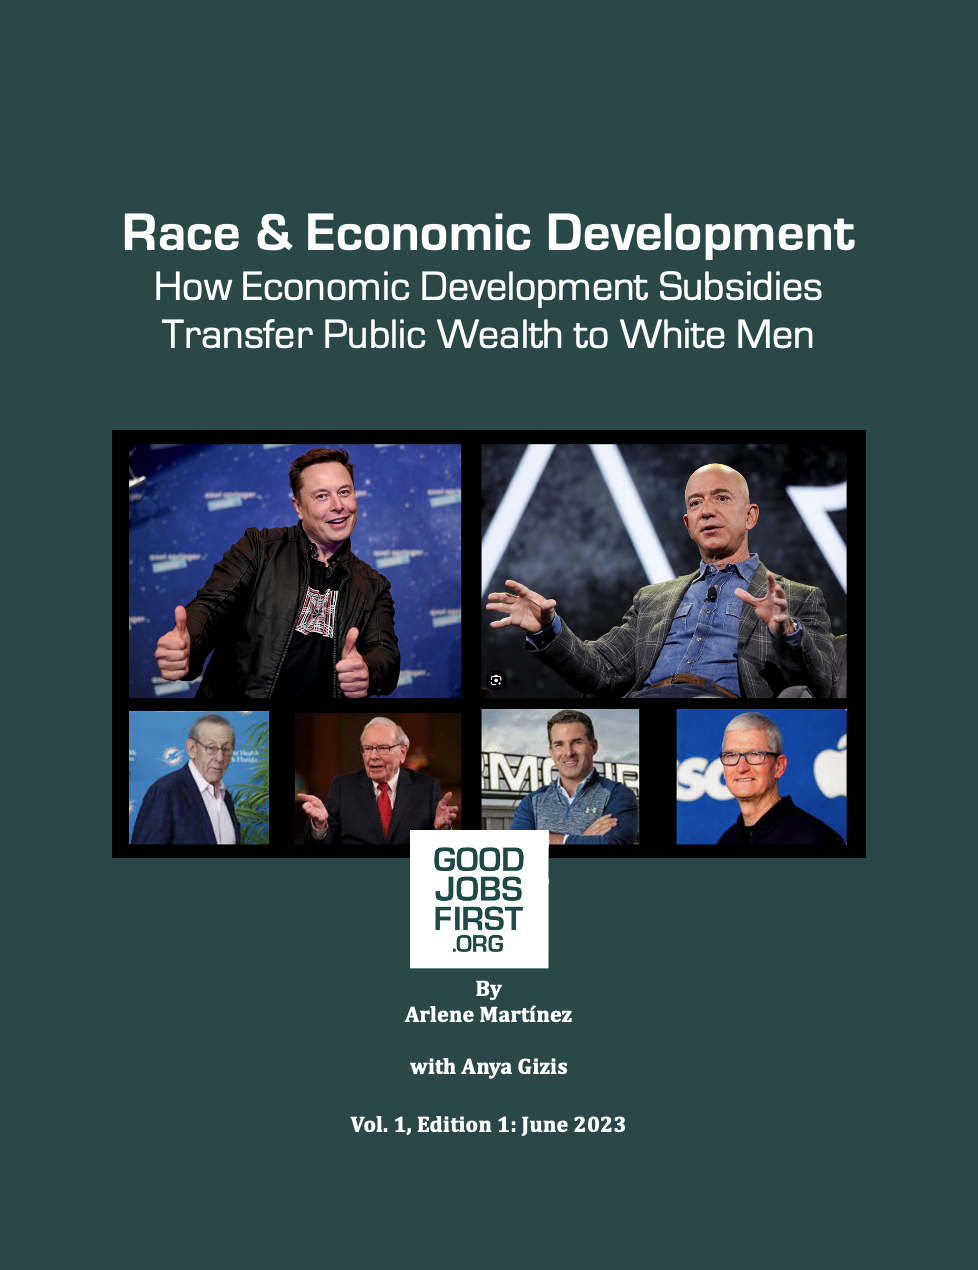 How Economic Development Subsidies Transfer Public Wealth to White Men